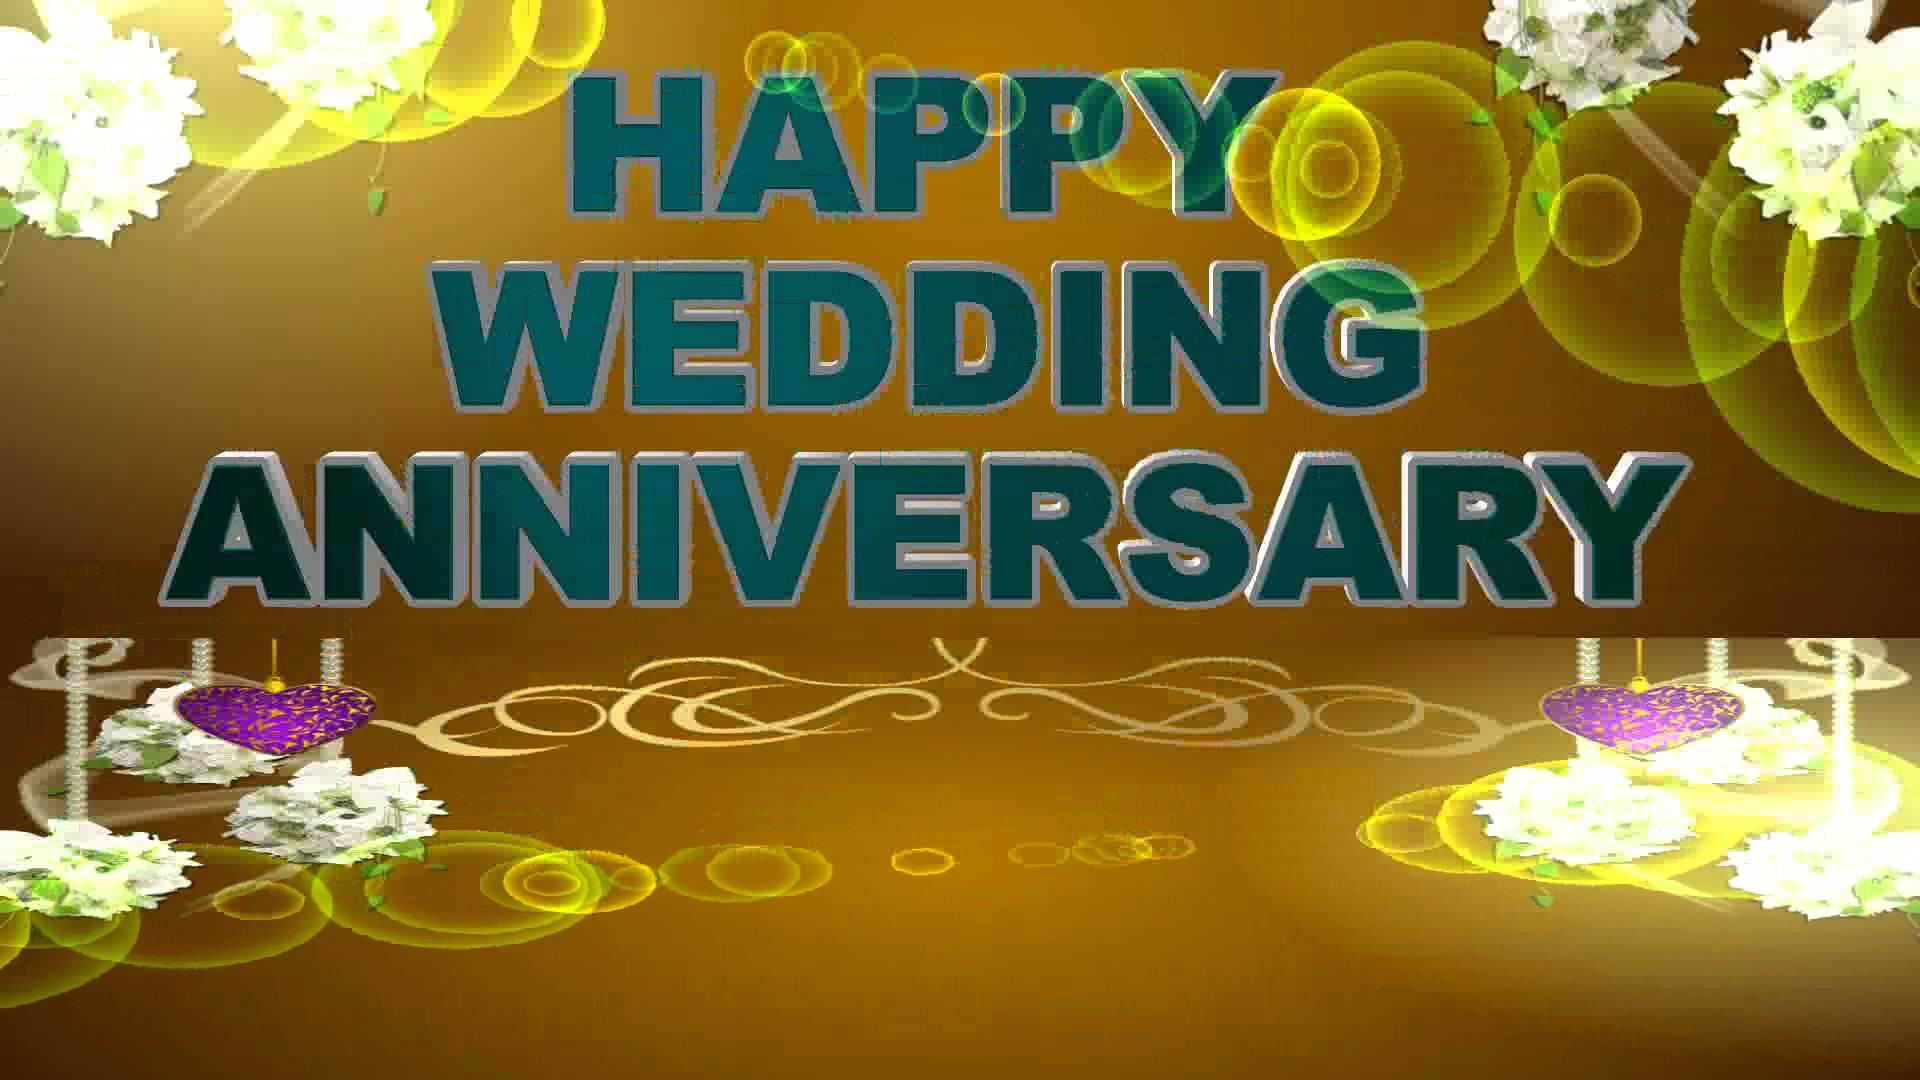 1920x1080 Happy Anniversary Greetings, Wedding Anniversary Wishes, Wedding Anniversary  Animation - YouTube